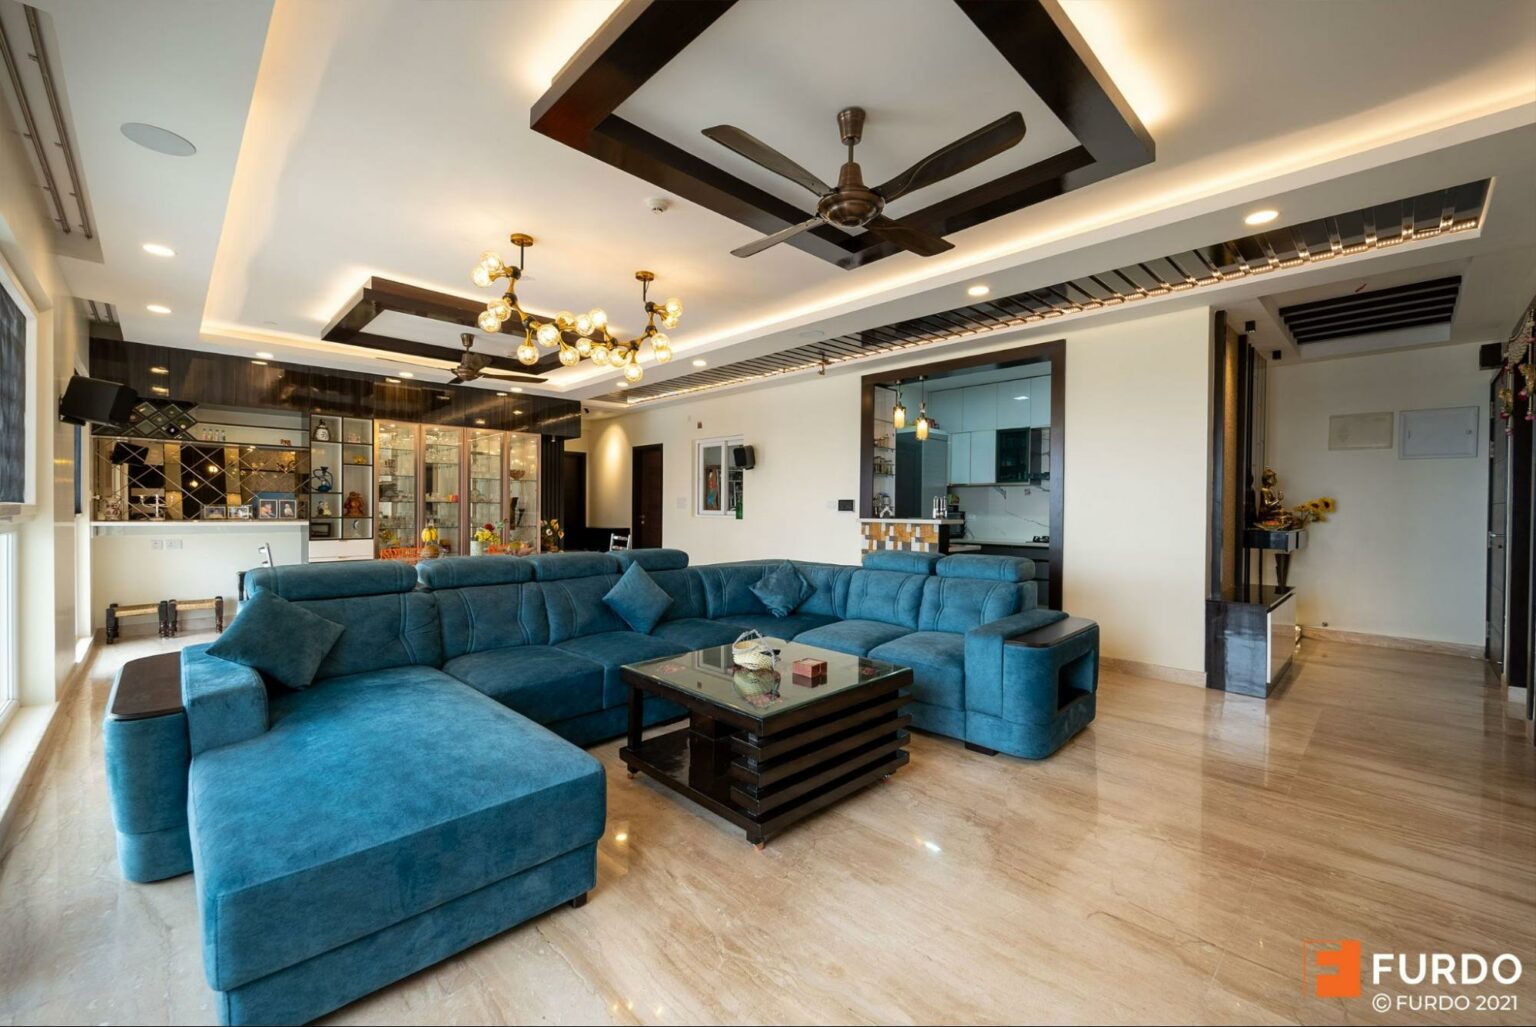 10 Best Sofa Set Designs for Your Living Room - Furdo